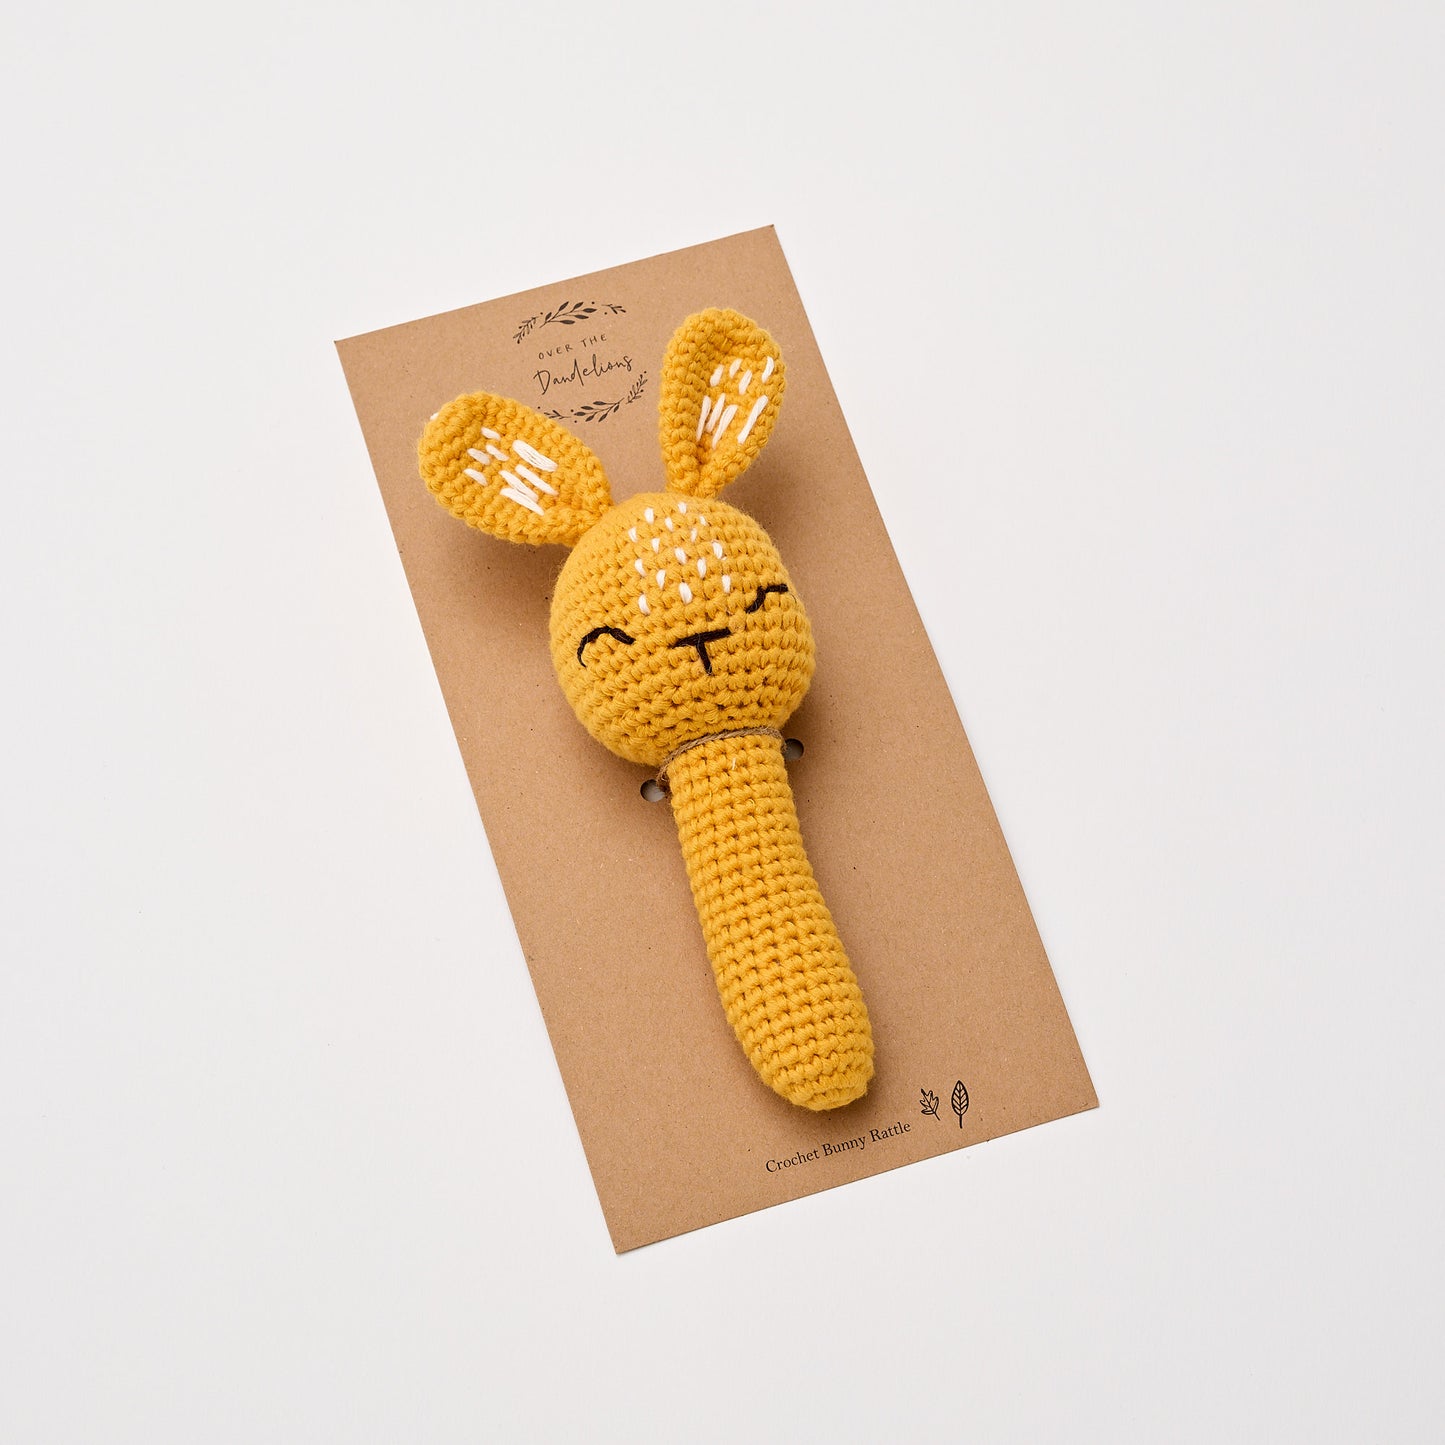 Crochet Bunny Rattle - Sunshine - Little Reef and Friends